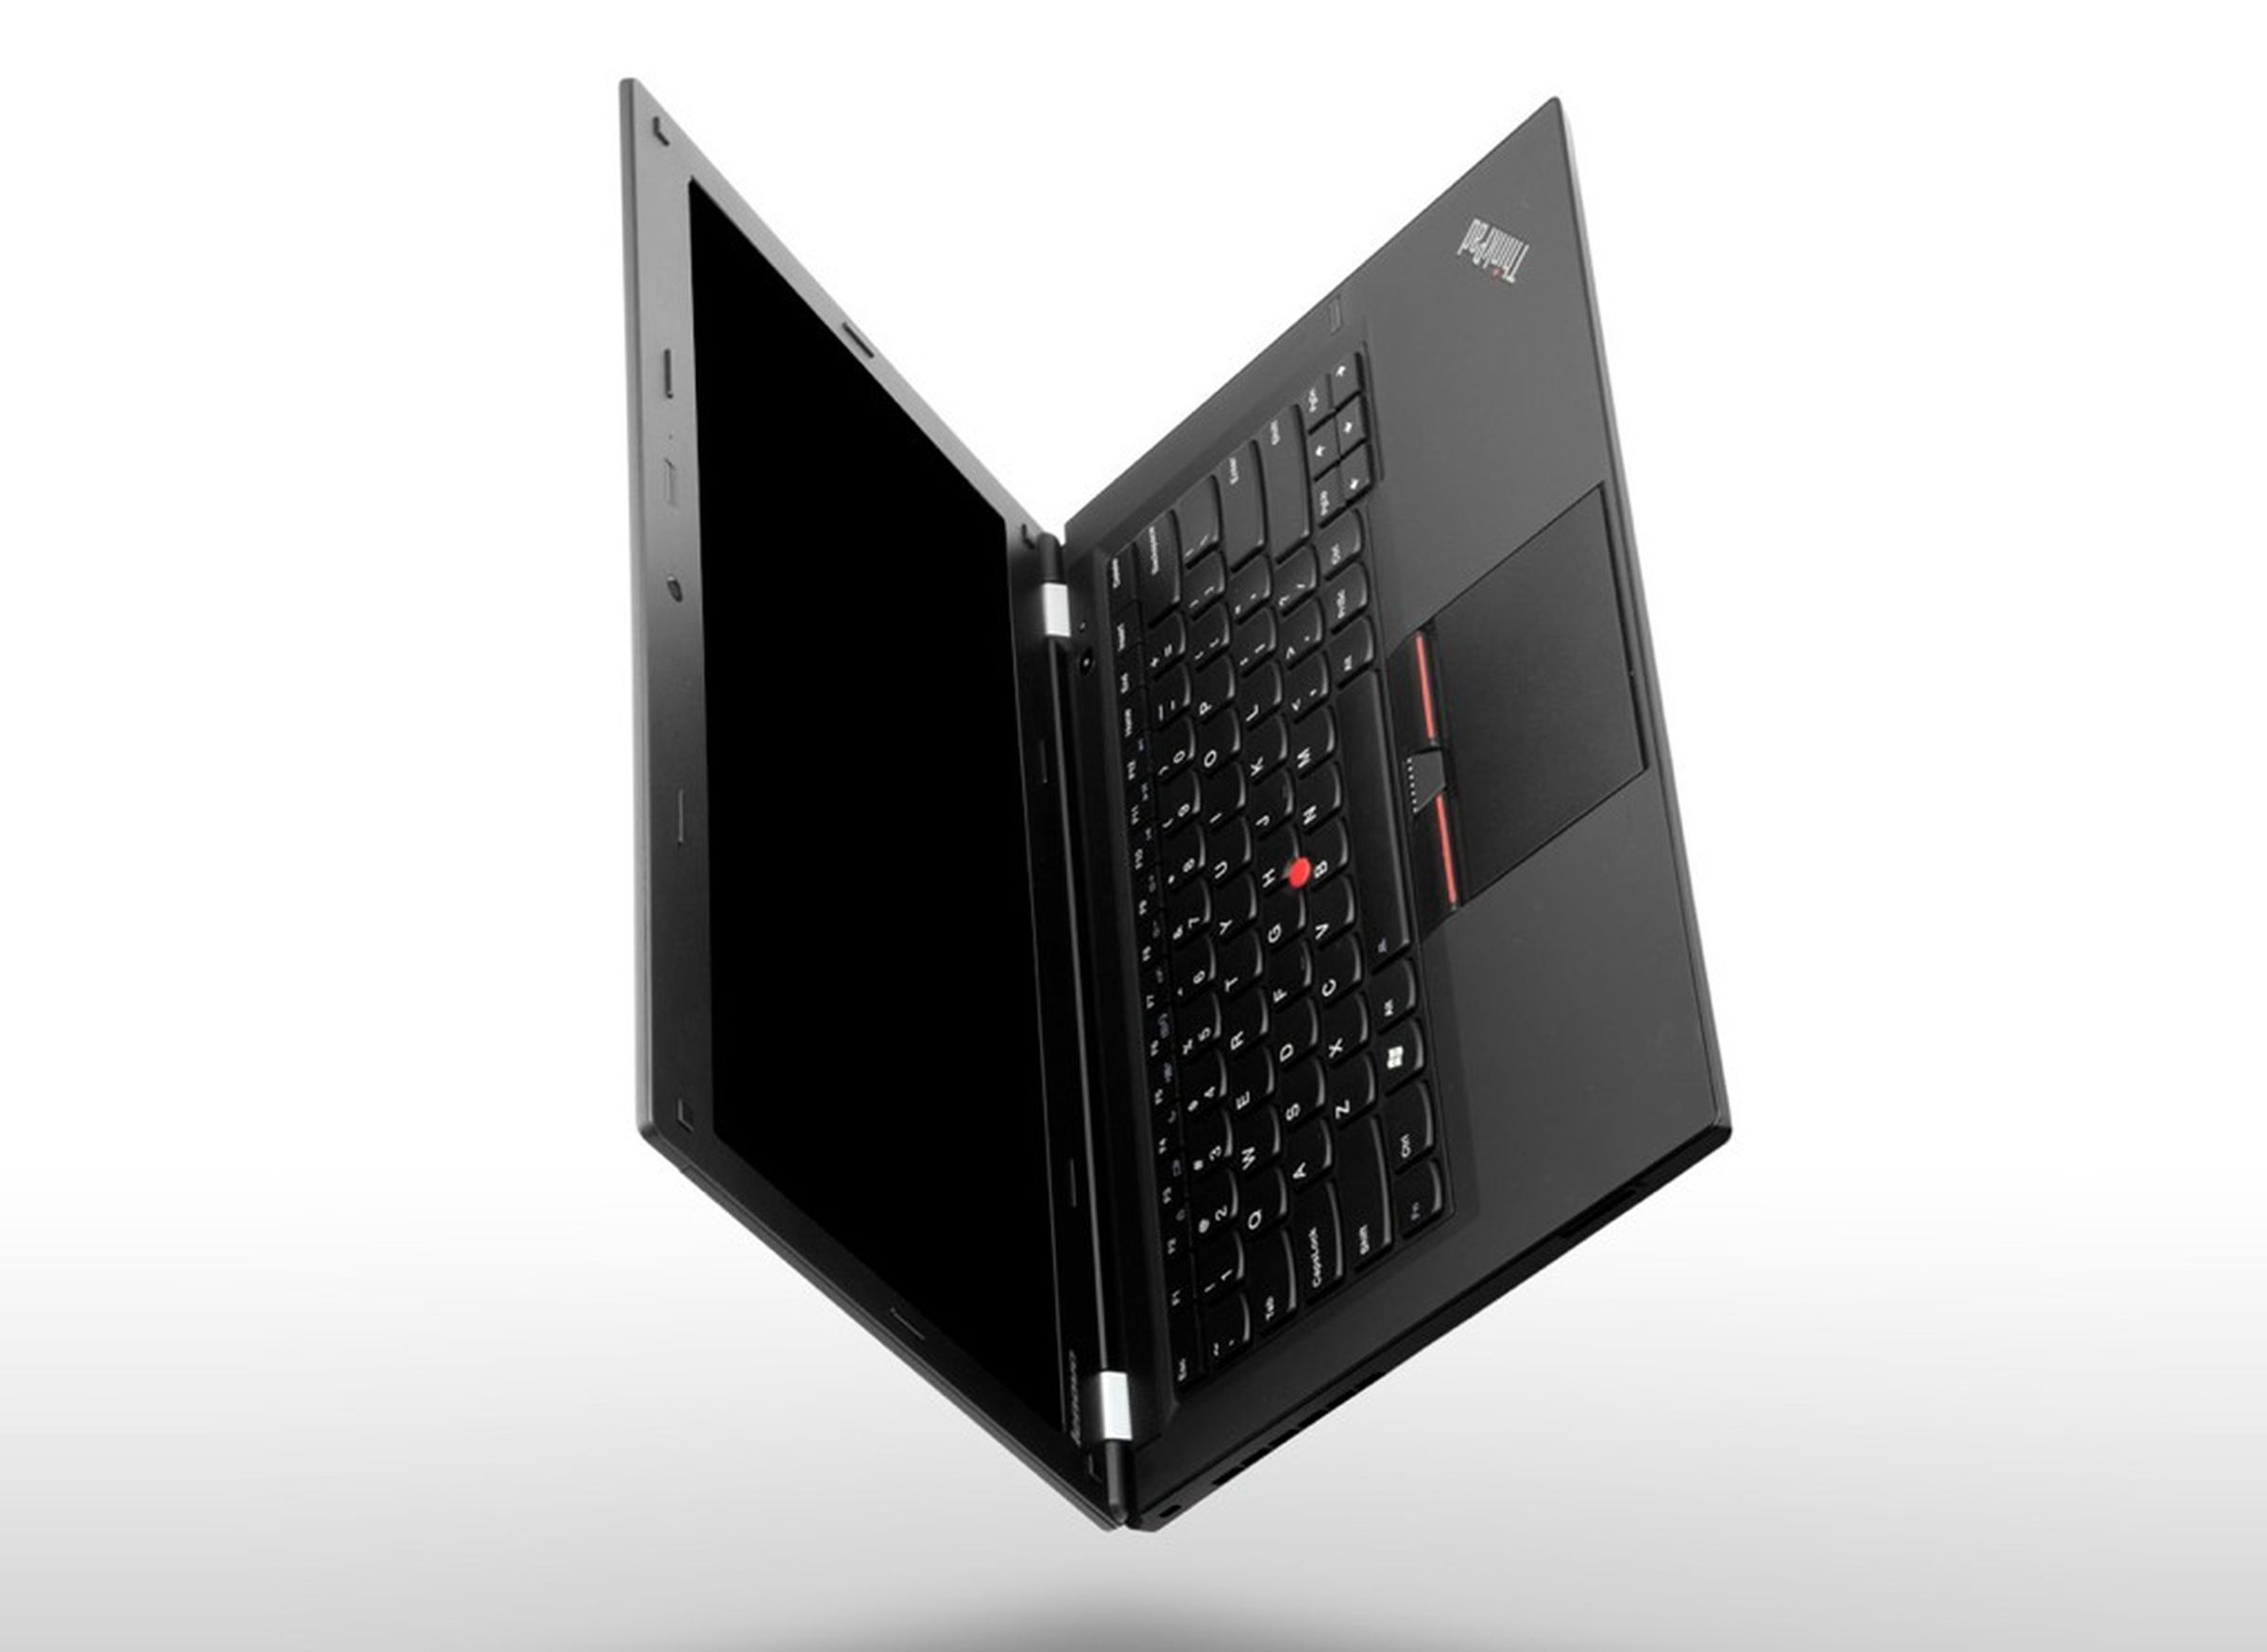 Lenovo ThinkPad T430u ultrabook press photos